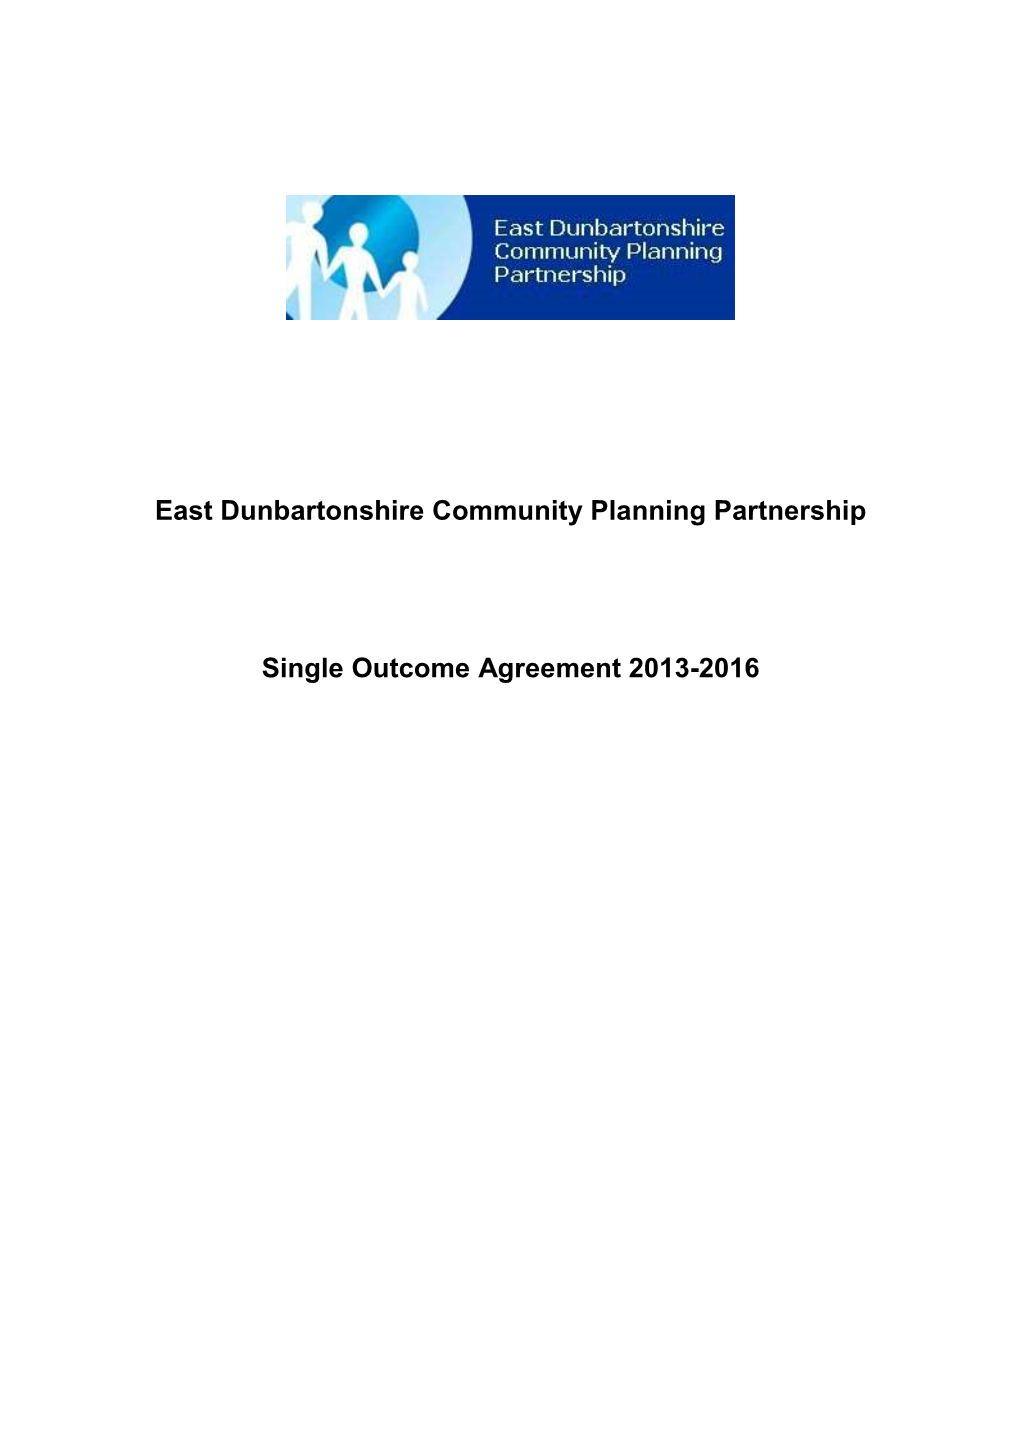 East Dunbartonshire Community Planning Partnership Single Outcome Agreement 2013-2016